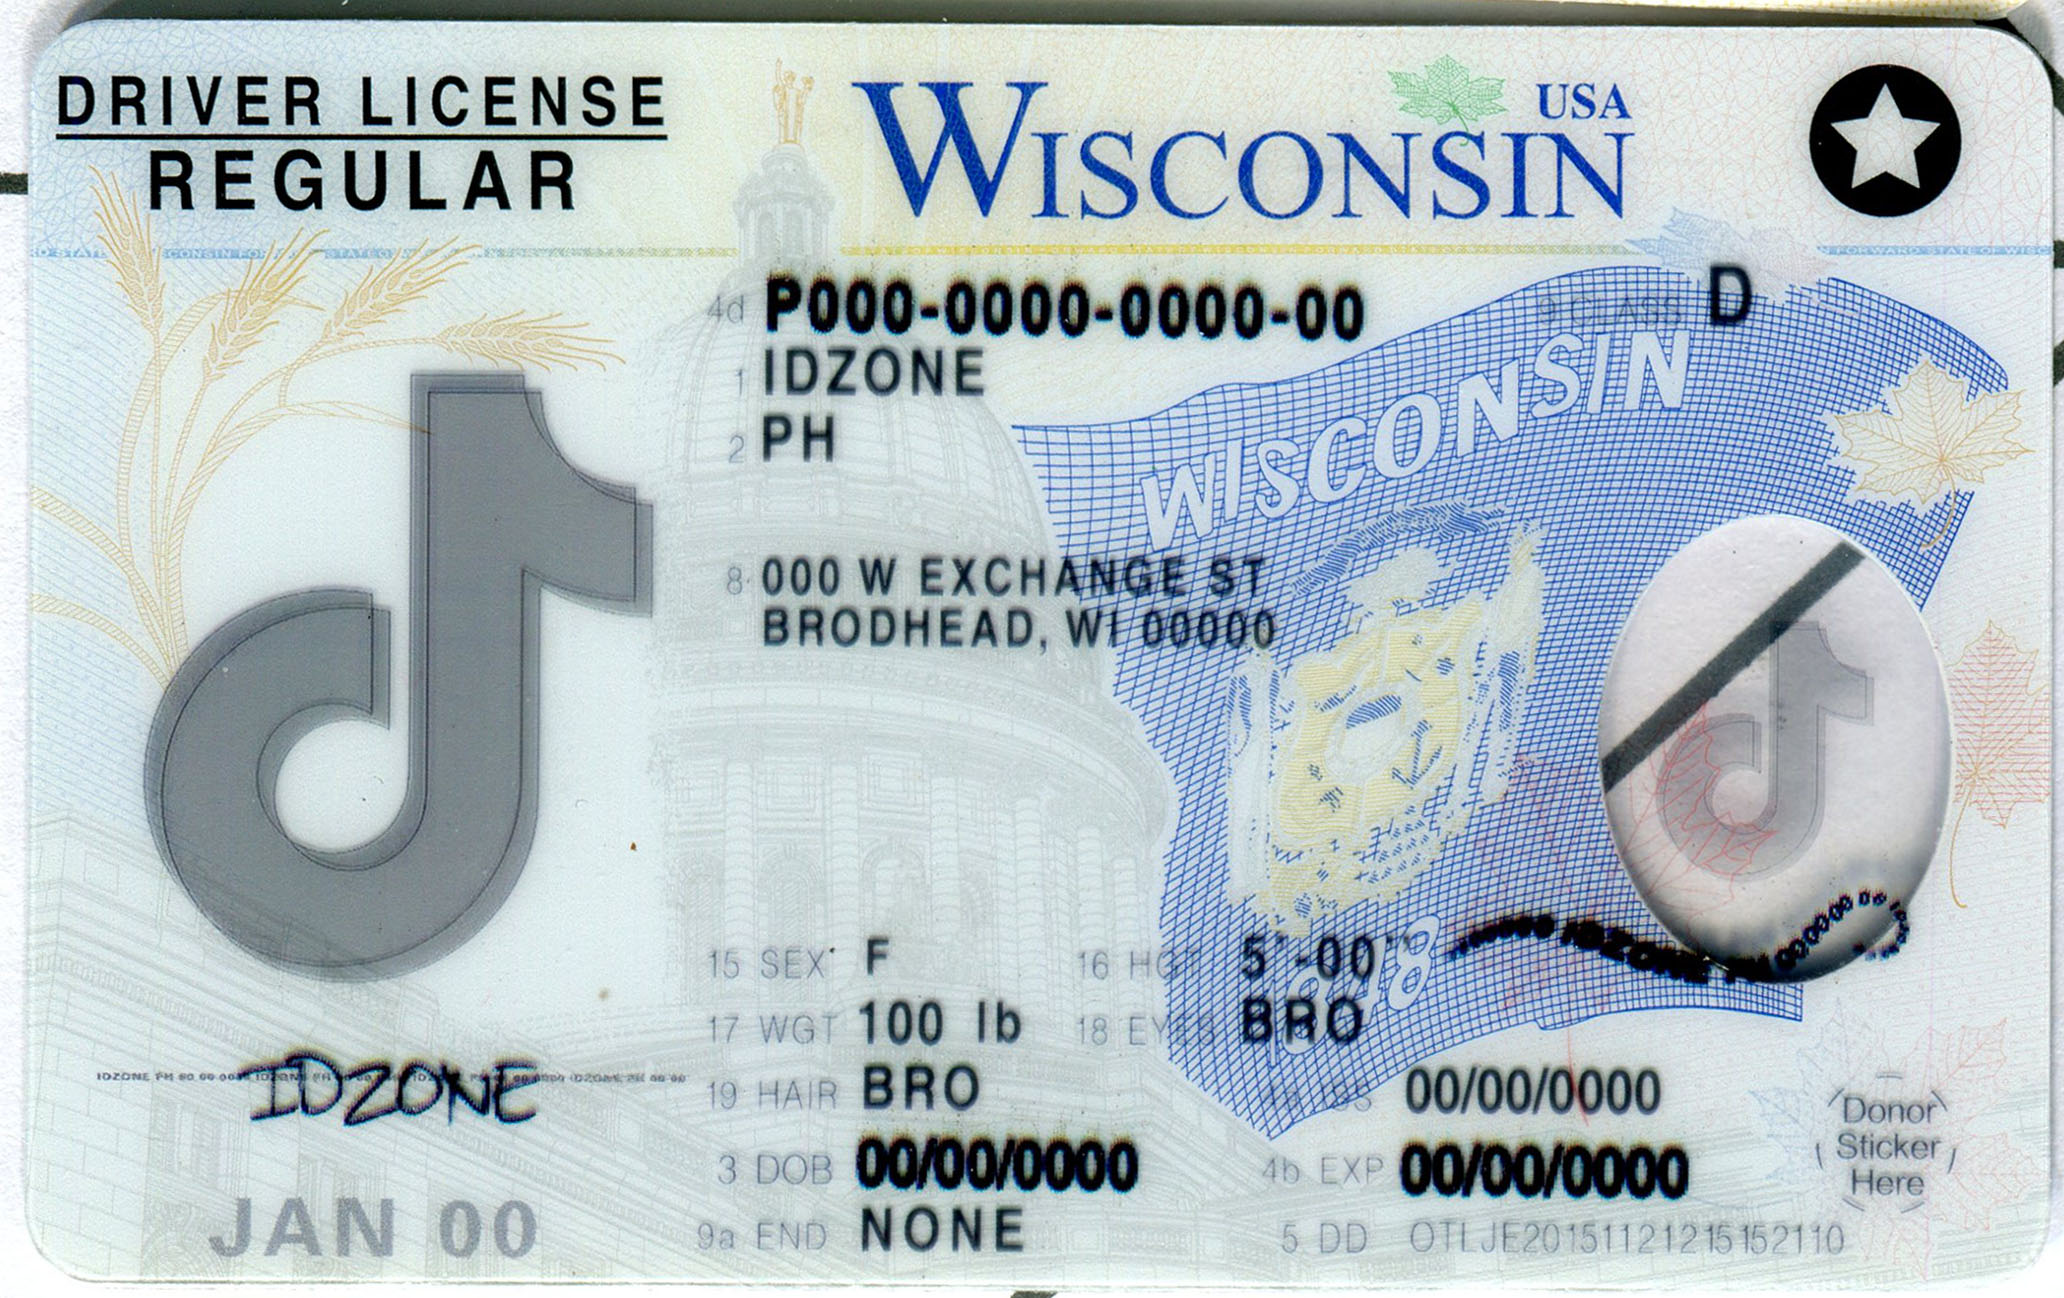 WISCONSIN-NEW fake id